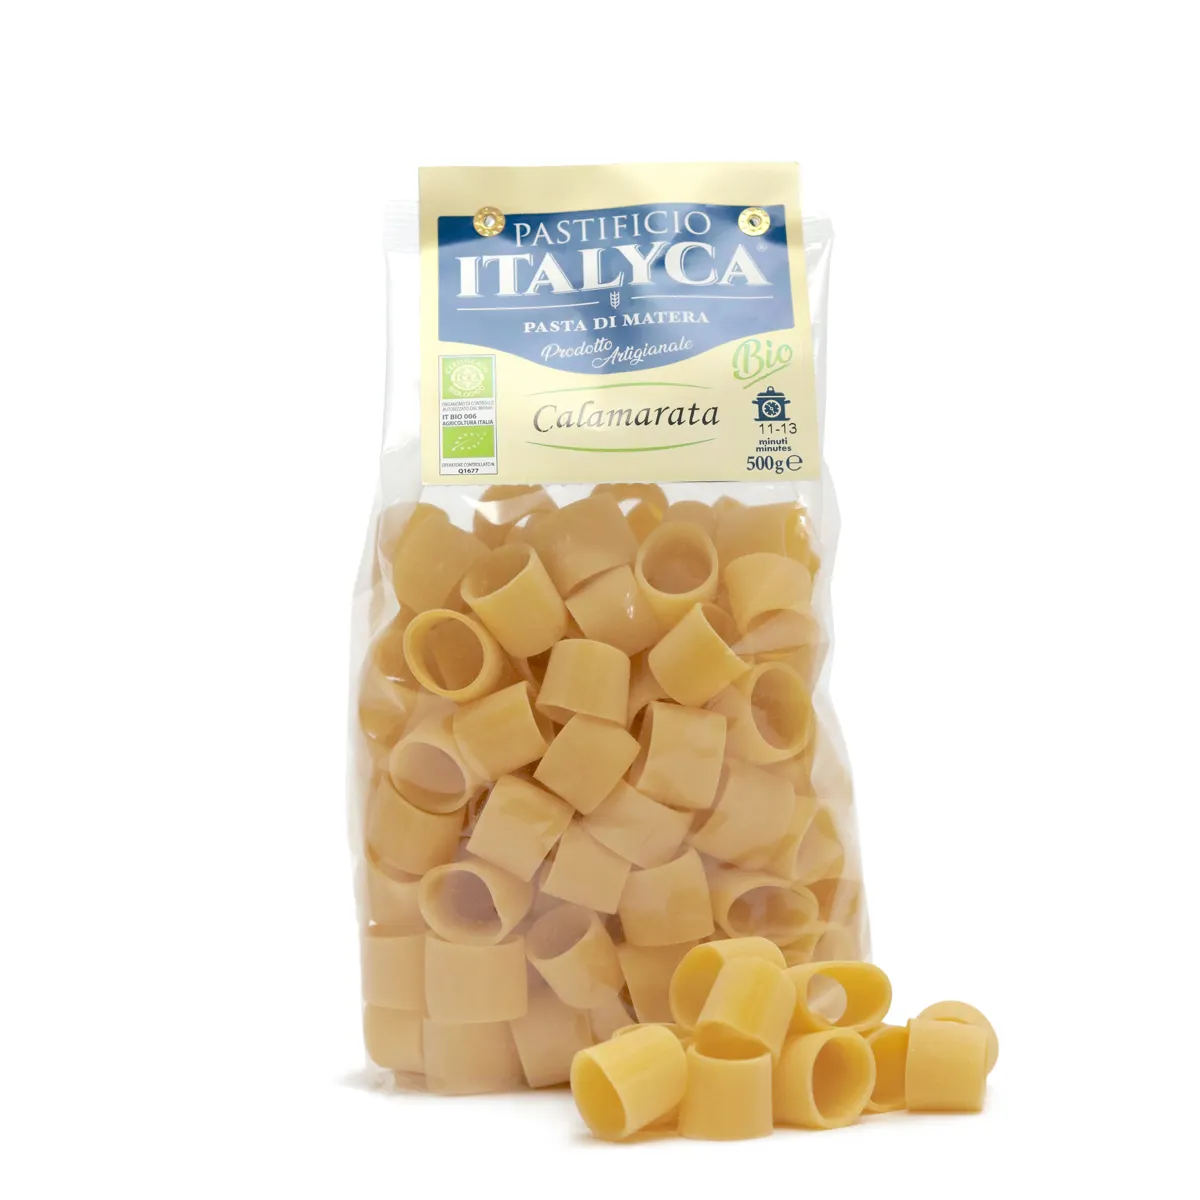 Calamarata de la mejor calidad 500g pasta artesanal orgánica certificada hecha de 100% Italia pasta seca italiana